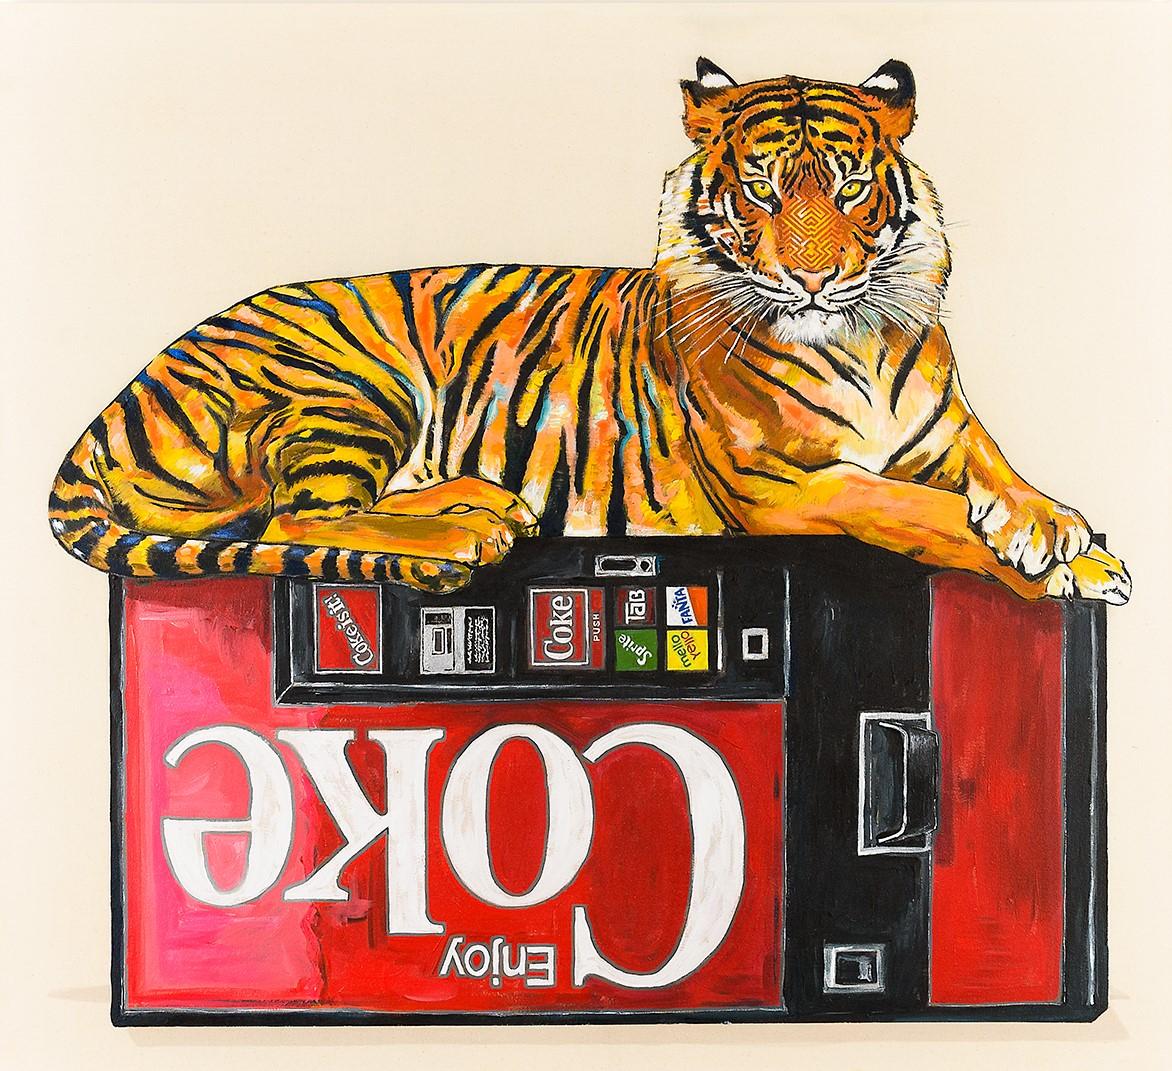 Electric Coffin Animal Painting – Tiger König